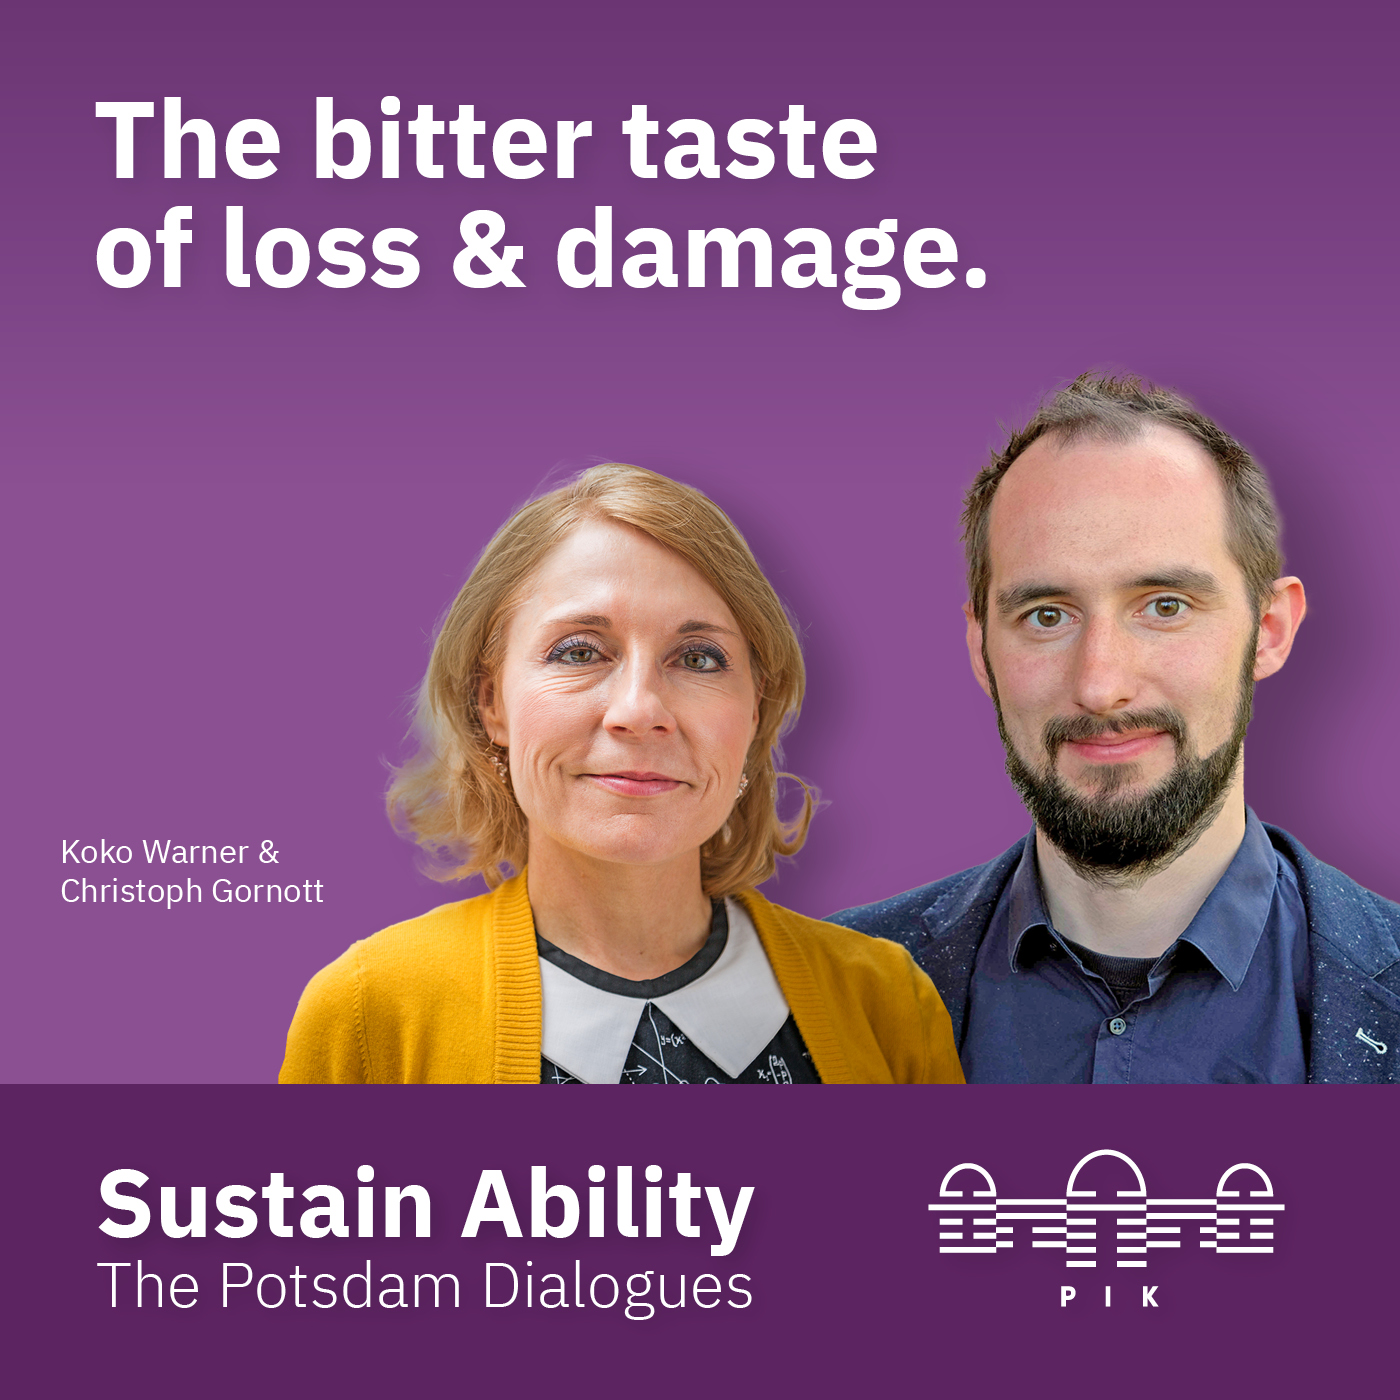 The bitter taste of loss & damage